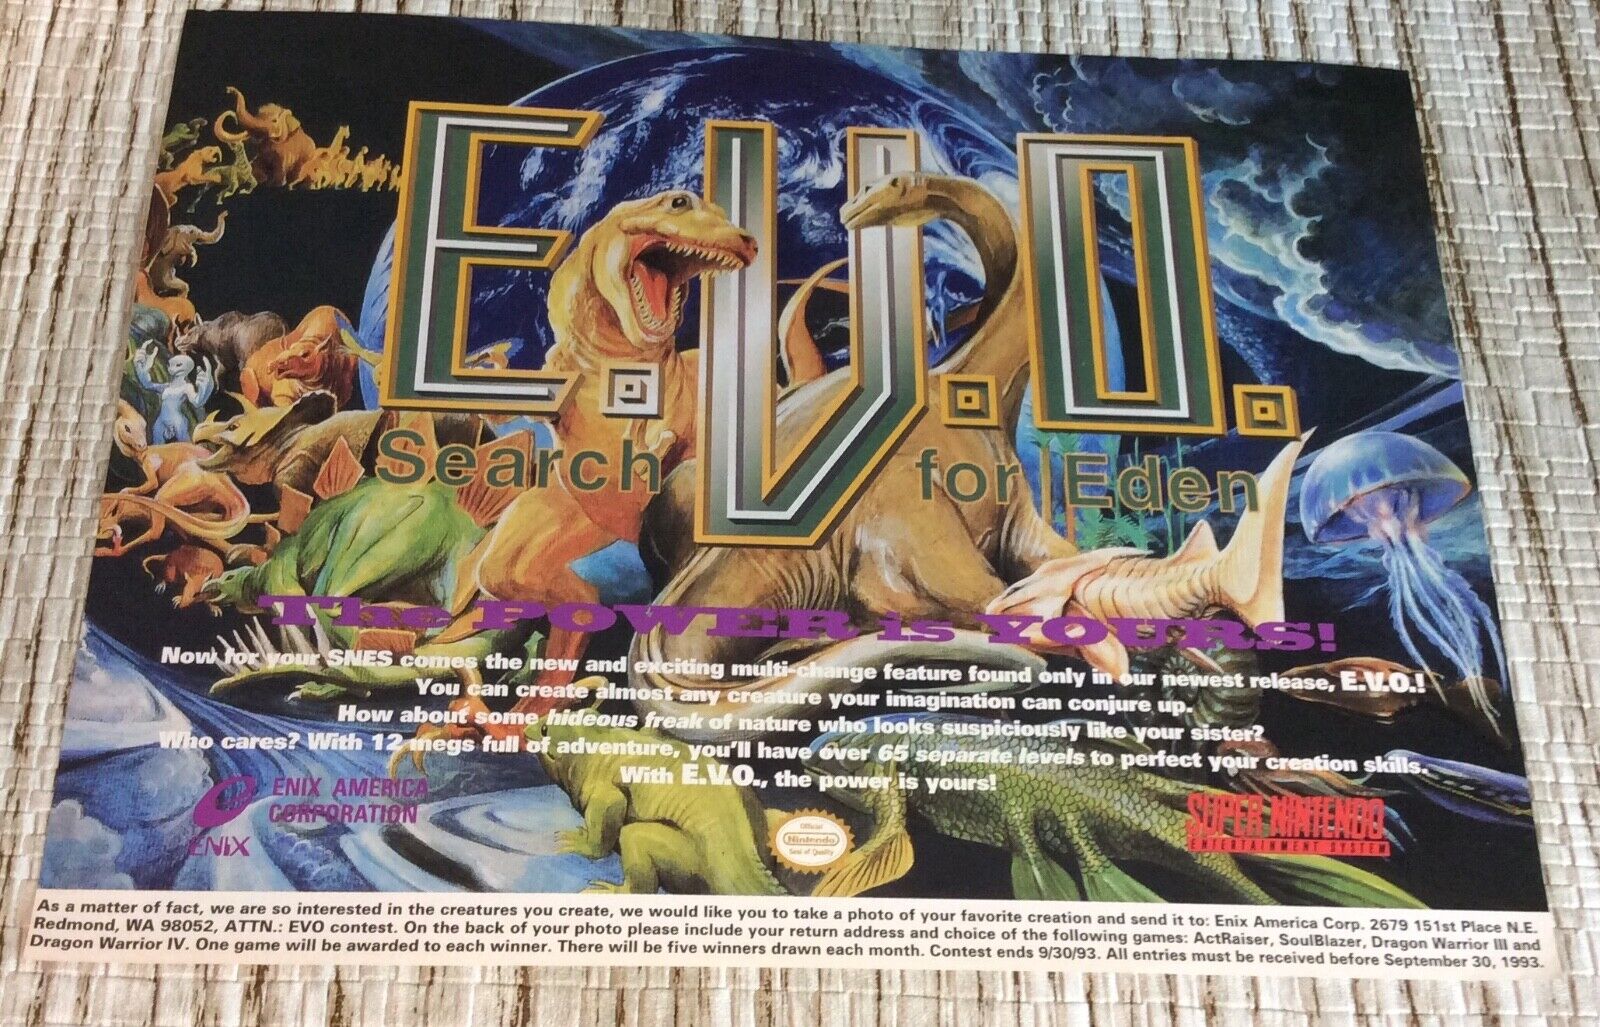 Evo Eden Super Nintendo Print Ad Poster Art (Frame Not Included)